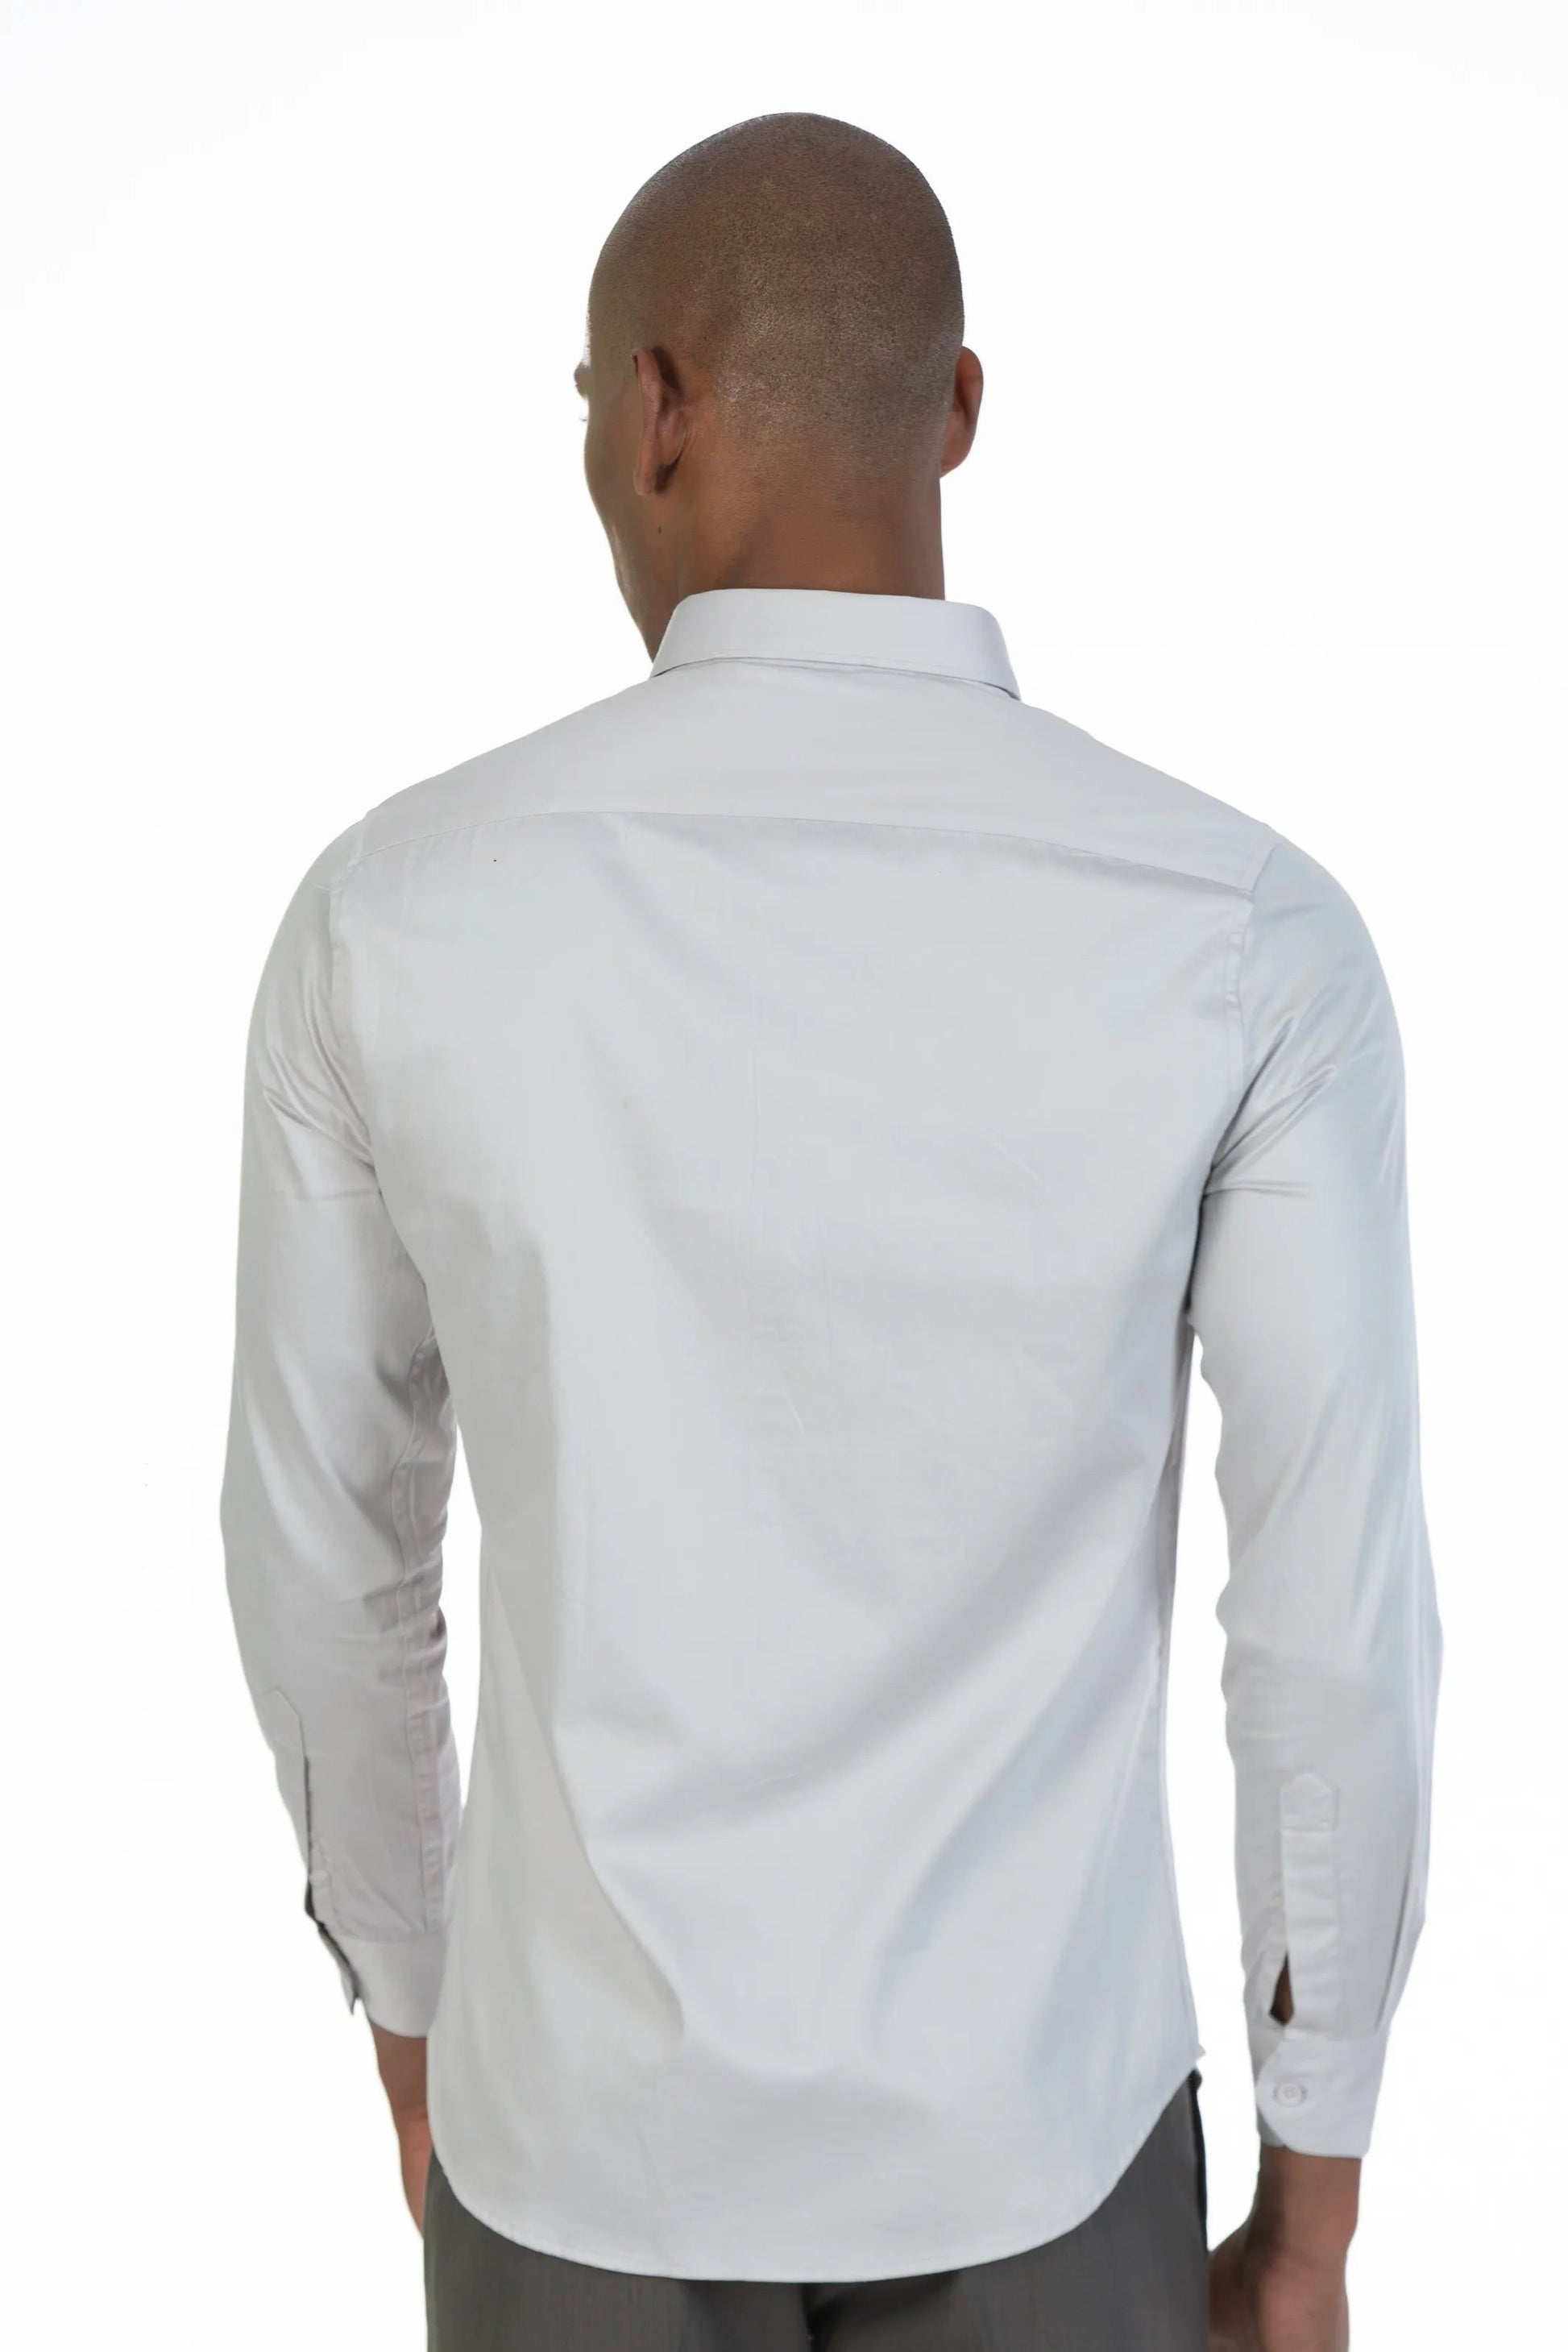 Buy Premium Satin Stretch Shirt Online.